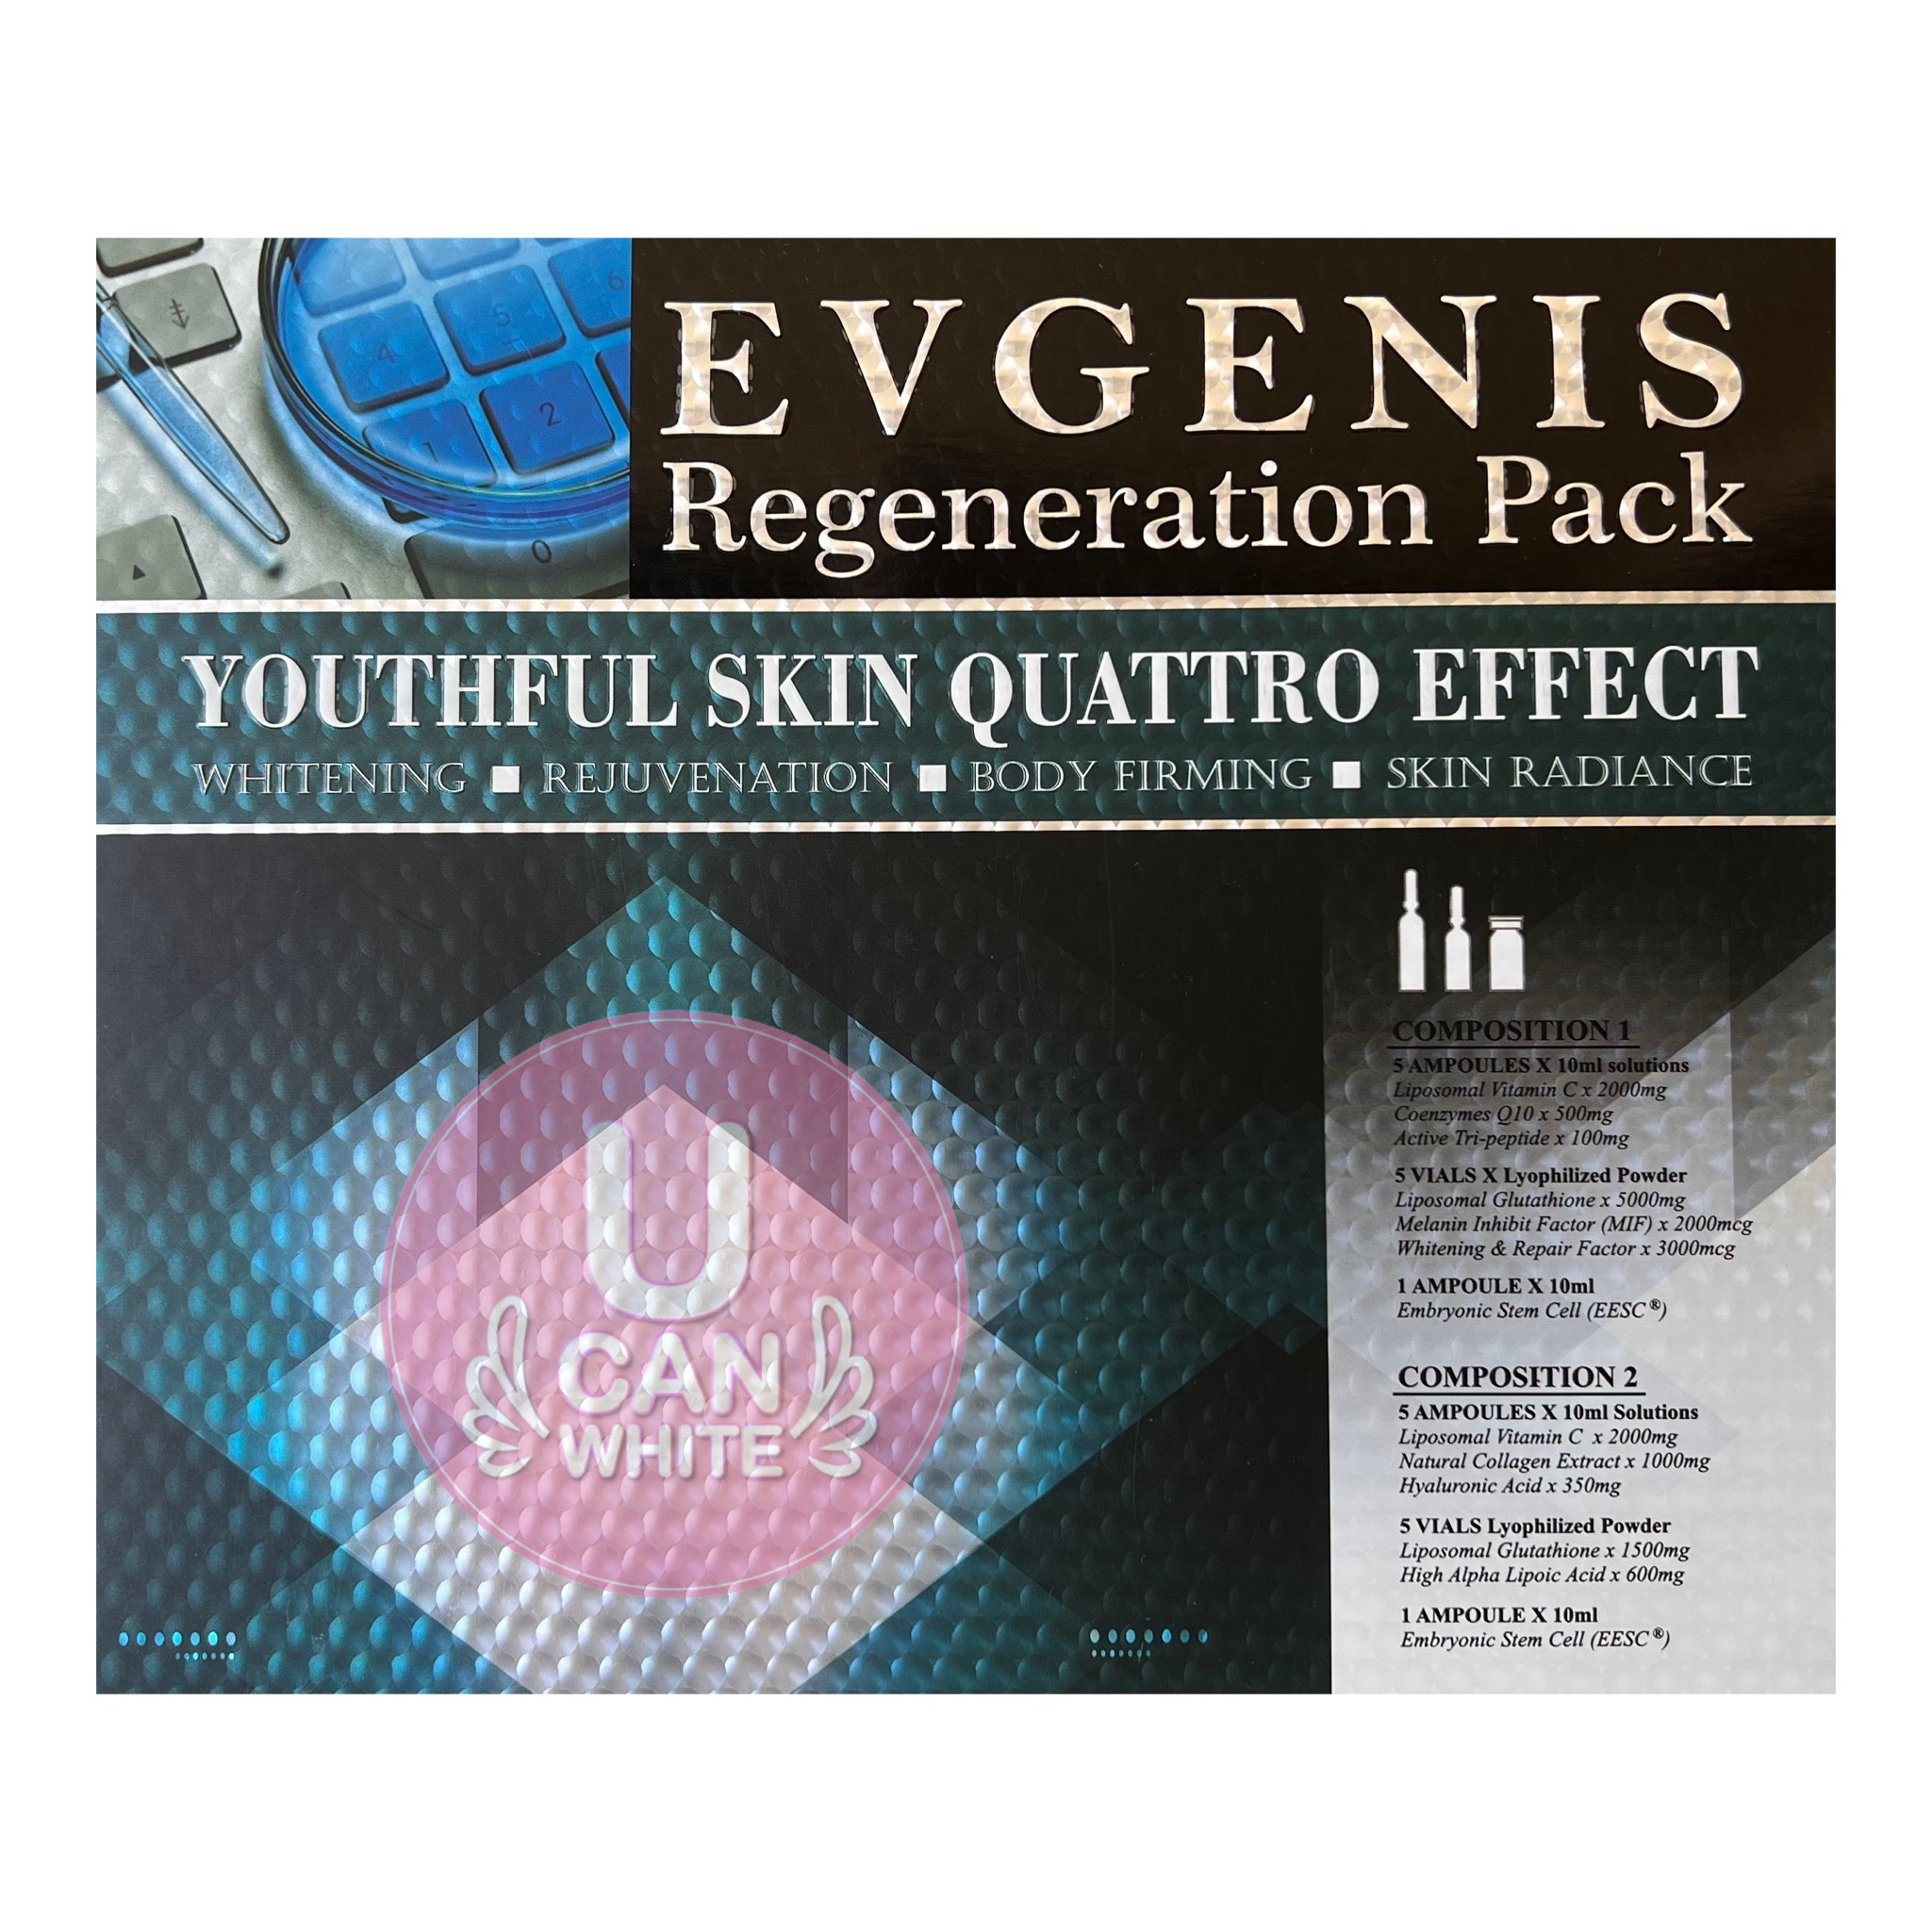 EVGENIS Regeneration Pack